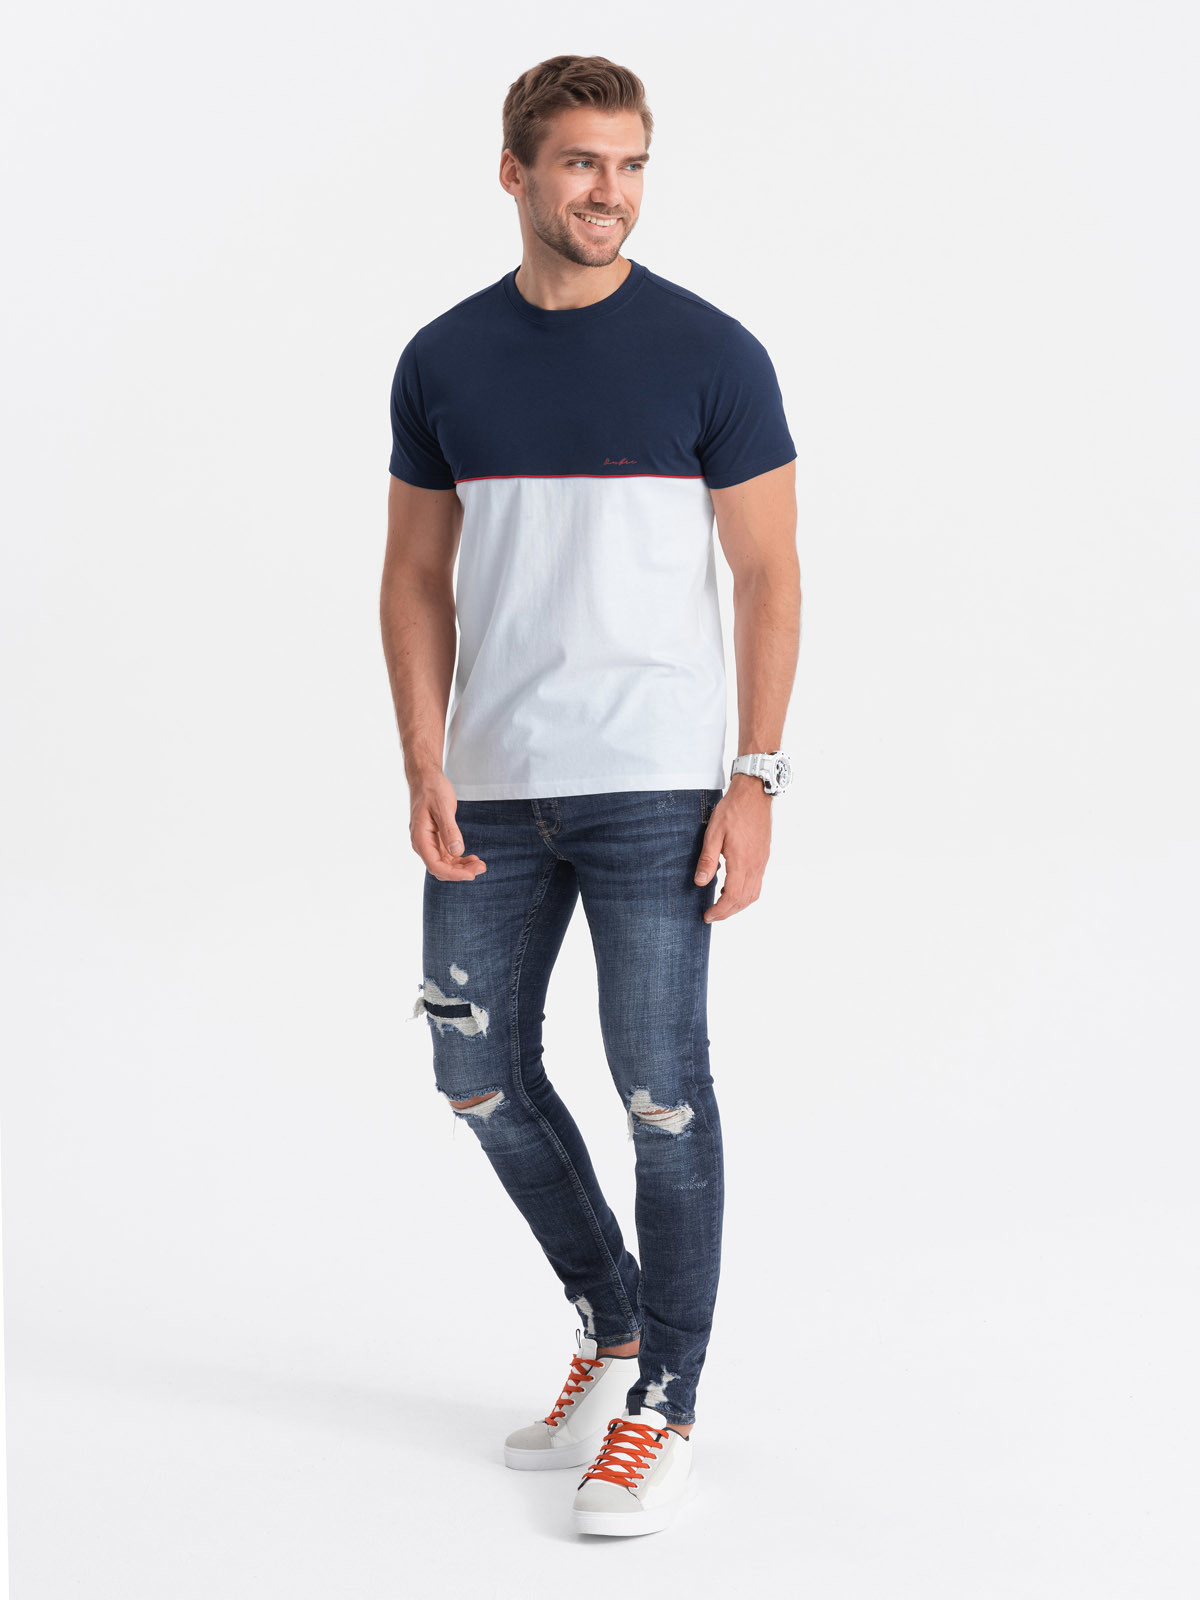 Men's two-tone cotton t-shirt V7 S1619